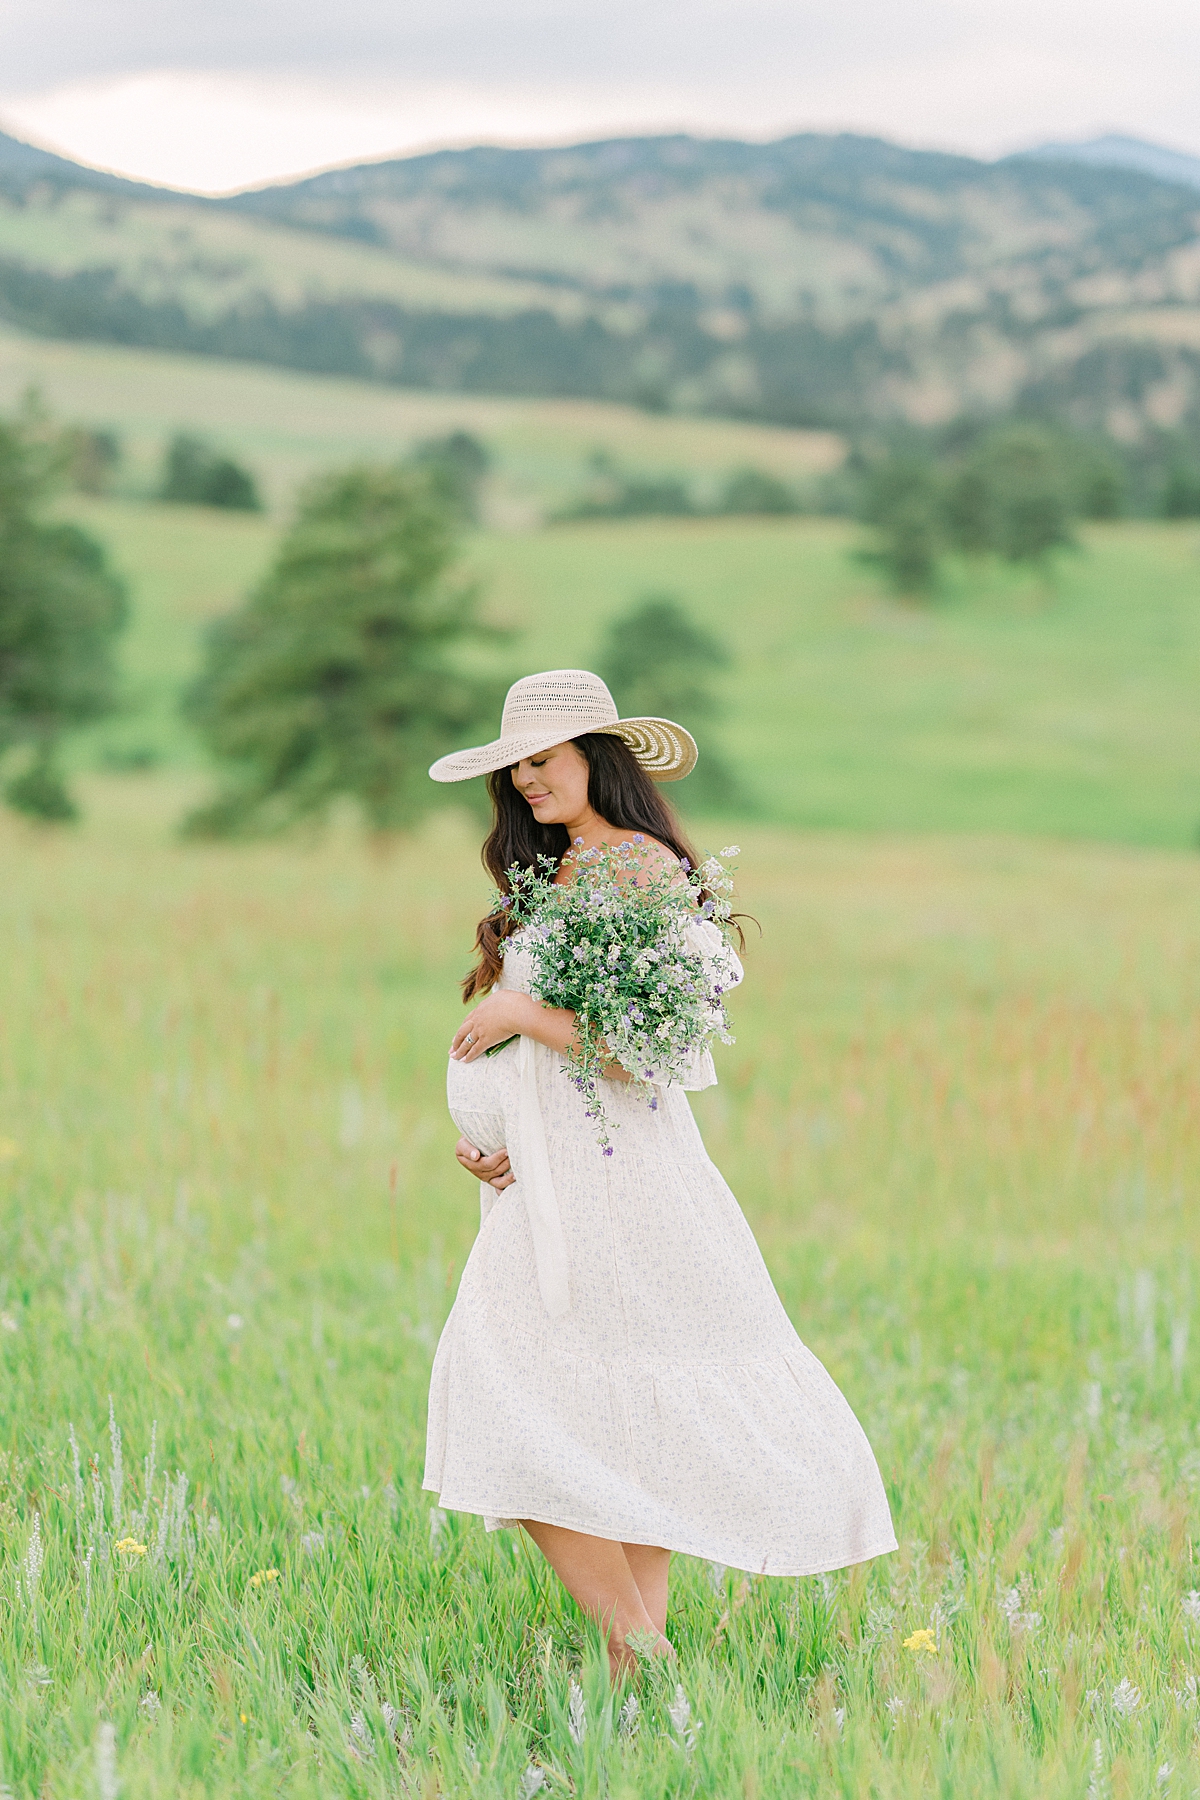 Denver maternity photos on film